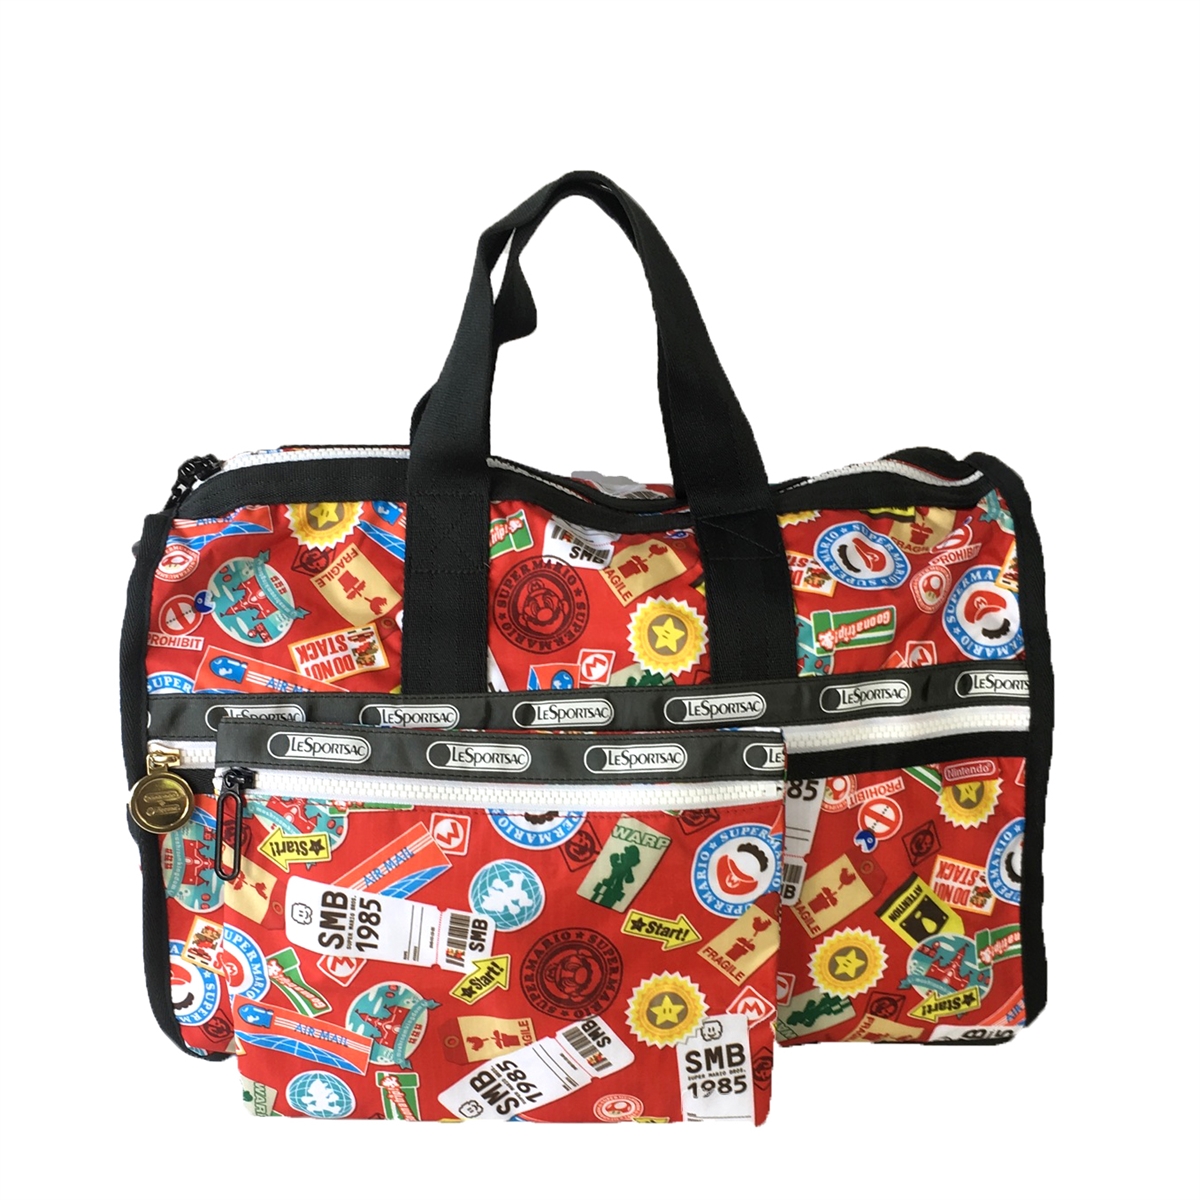 SALE PRICE Steve Madden red weekender travel bag